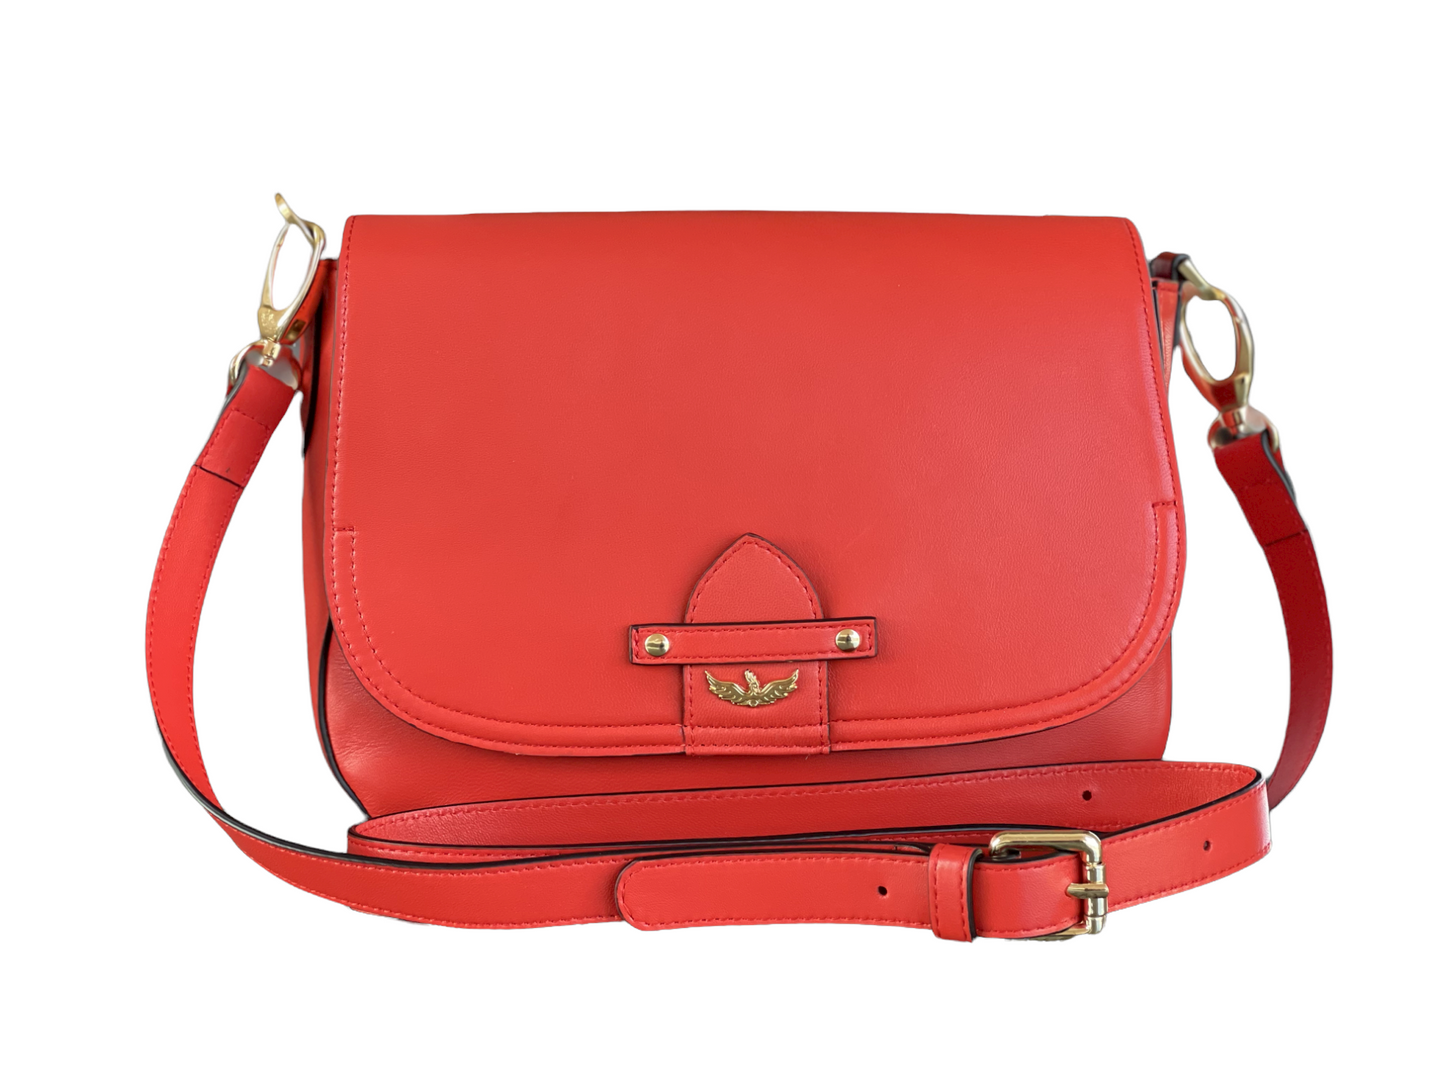 Prada Embleme Saffiano Leather Crossbody Bag In Red